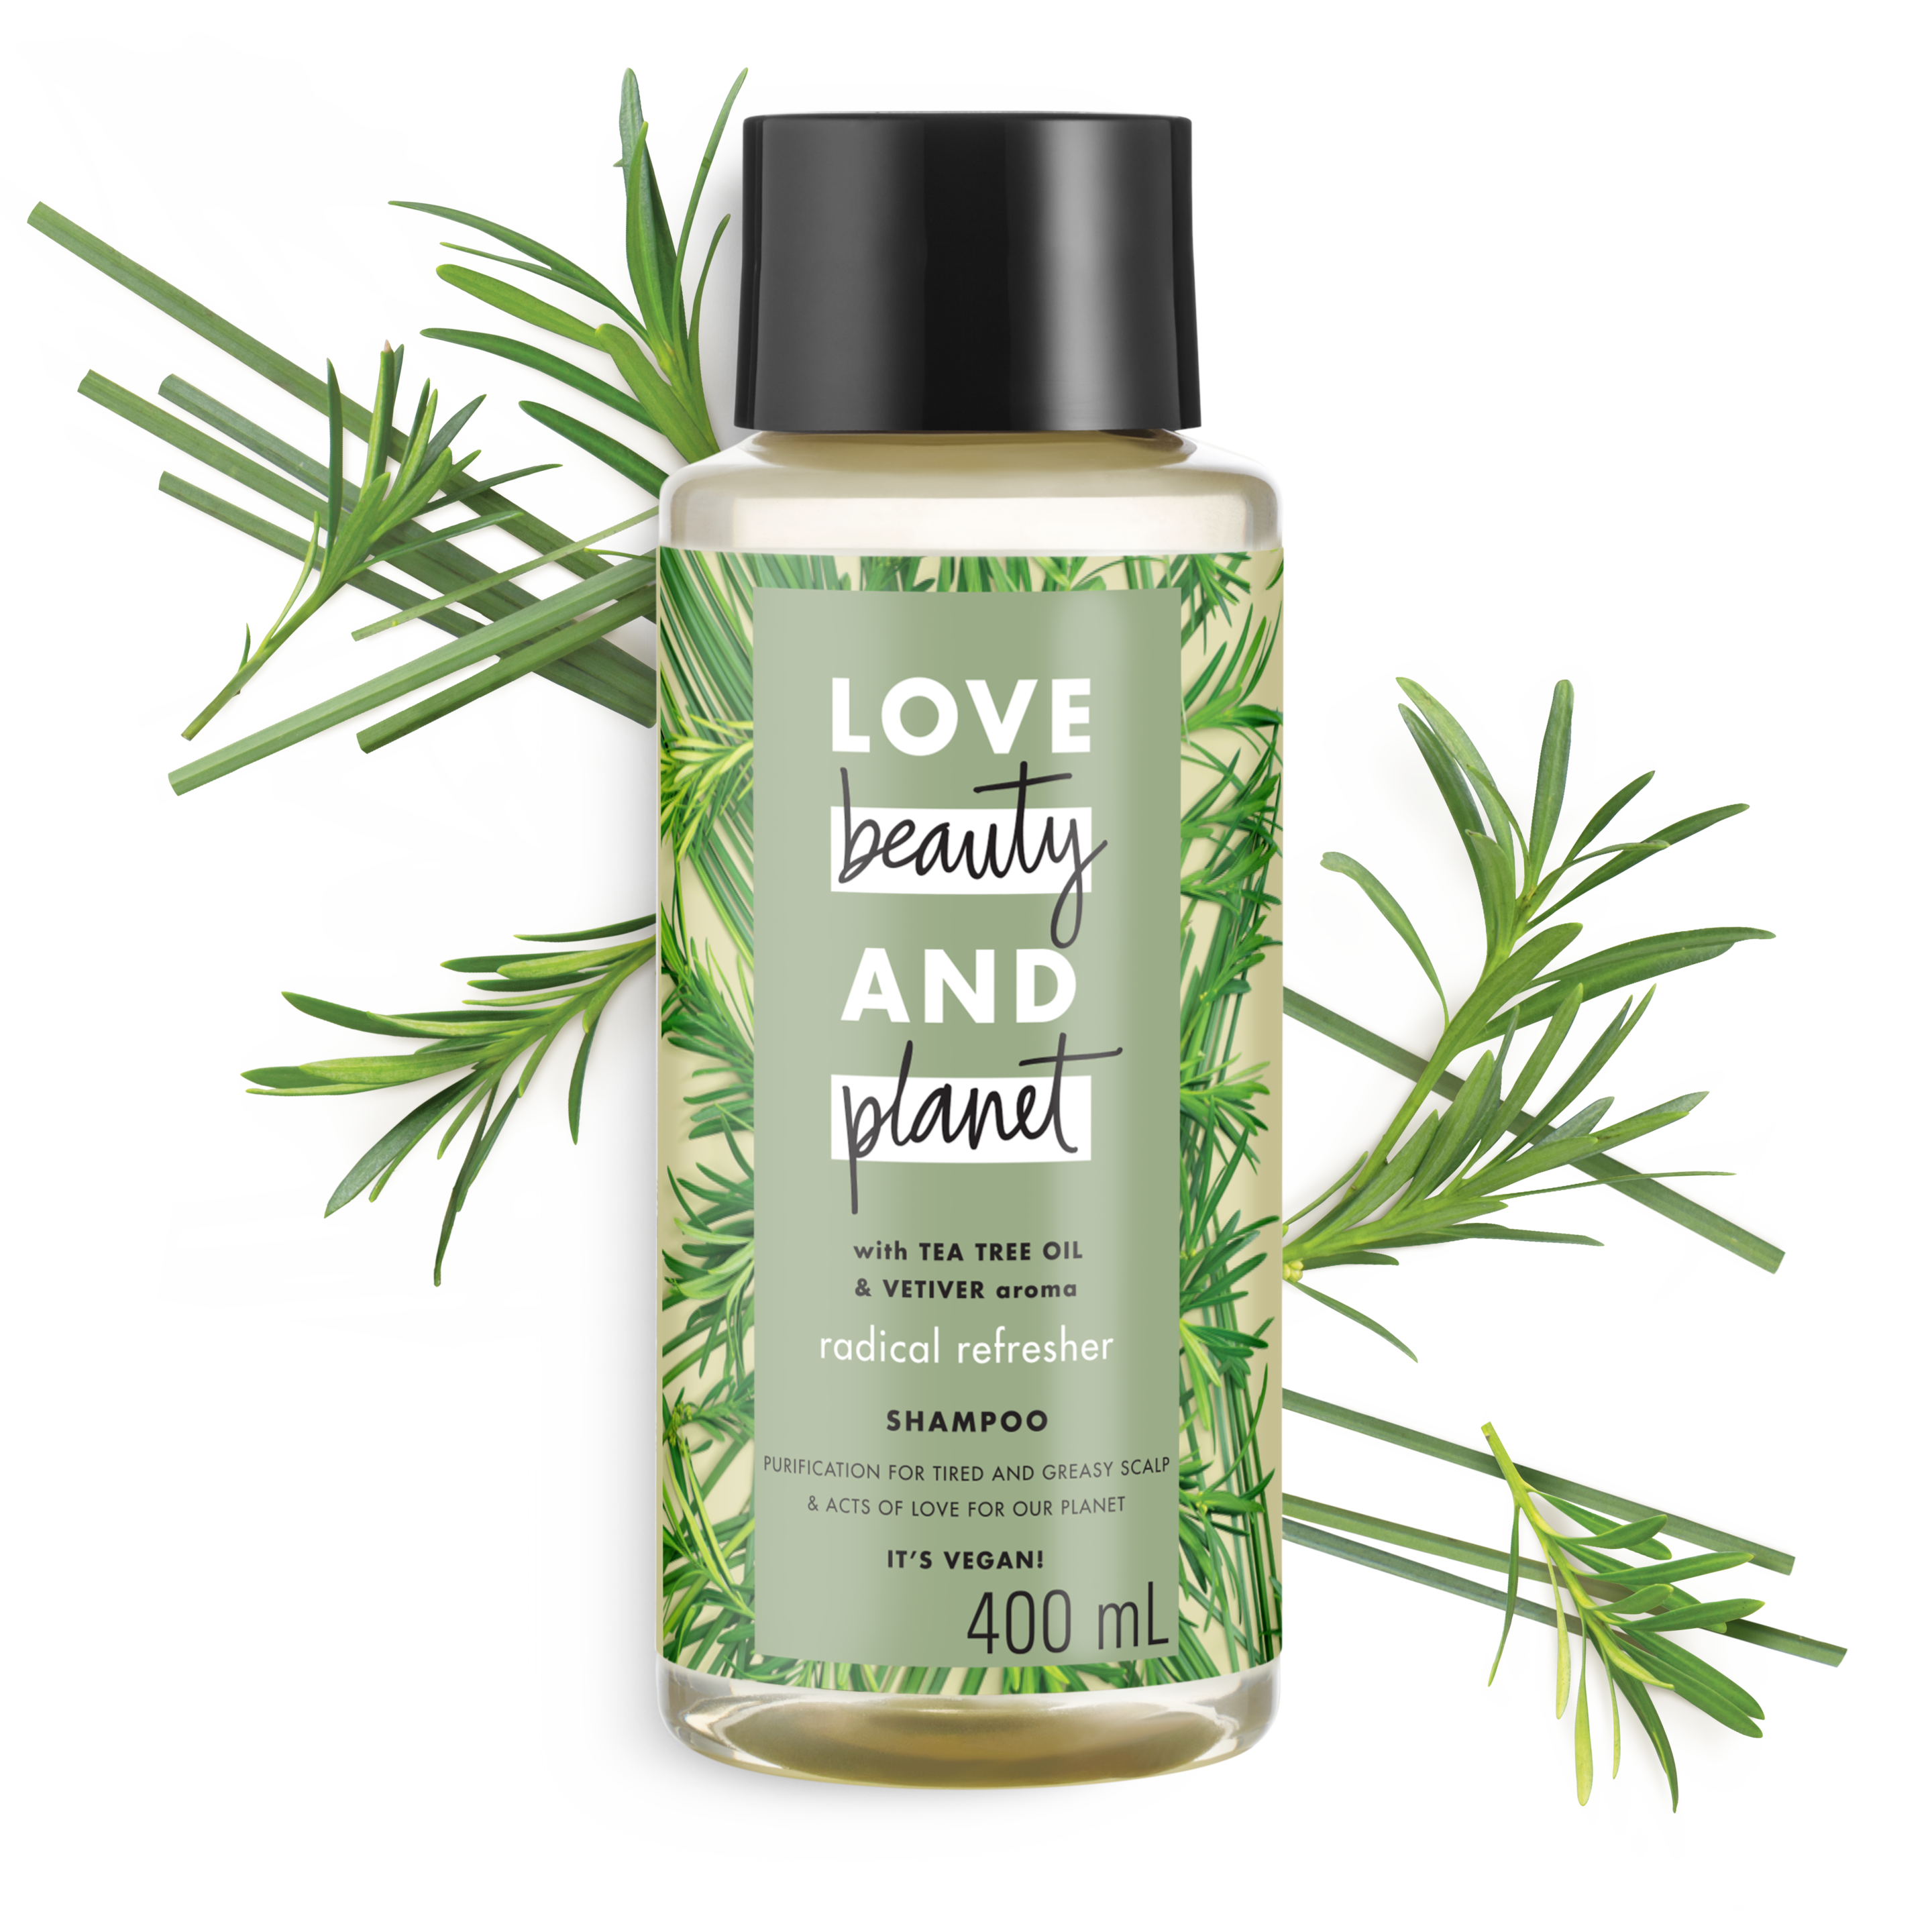 Tampak depan kemasan Love Beauty and Planet Tea Tree Oil & Vetiver Shampoo ukuran 400 ml Text